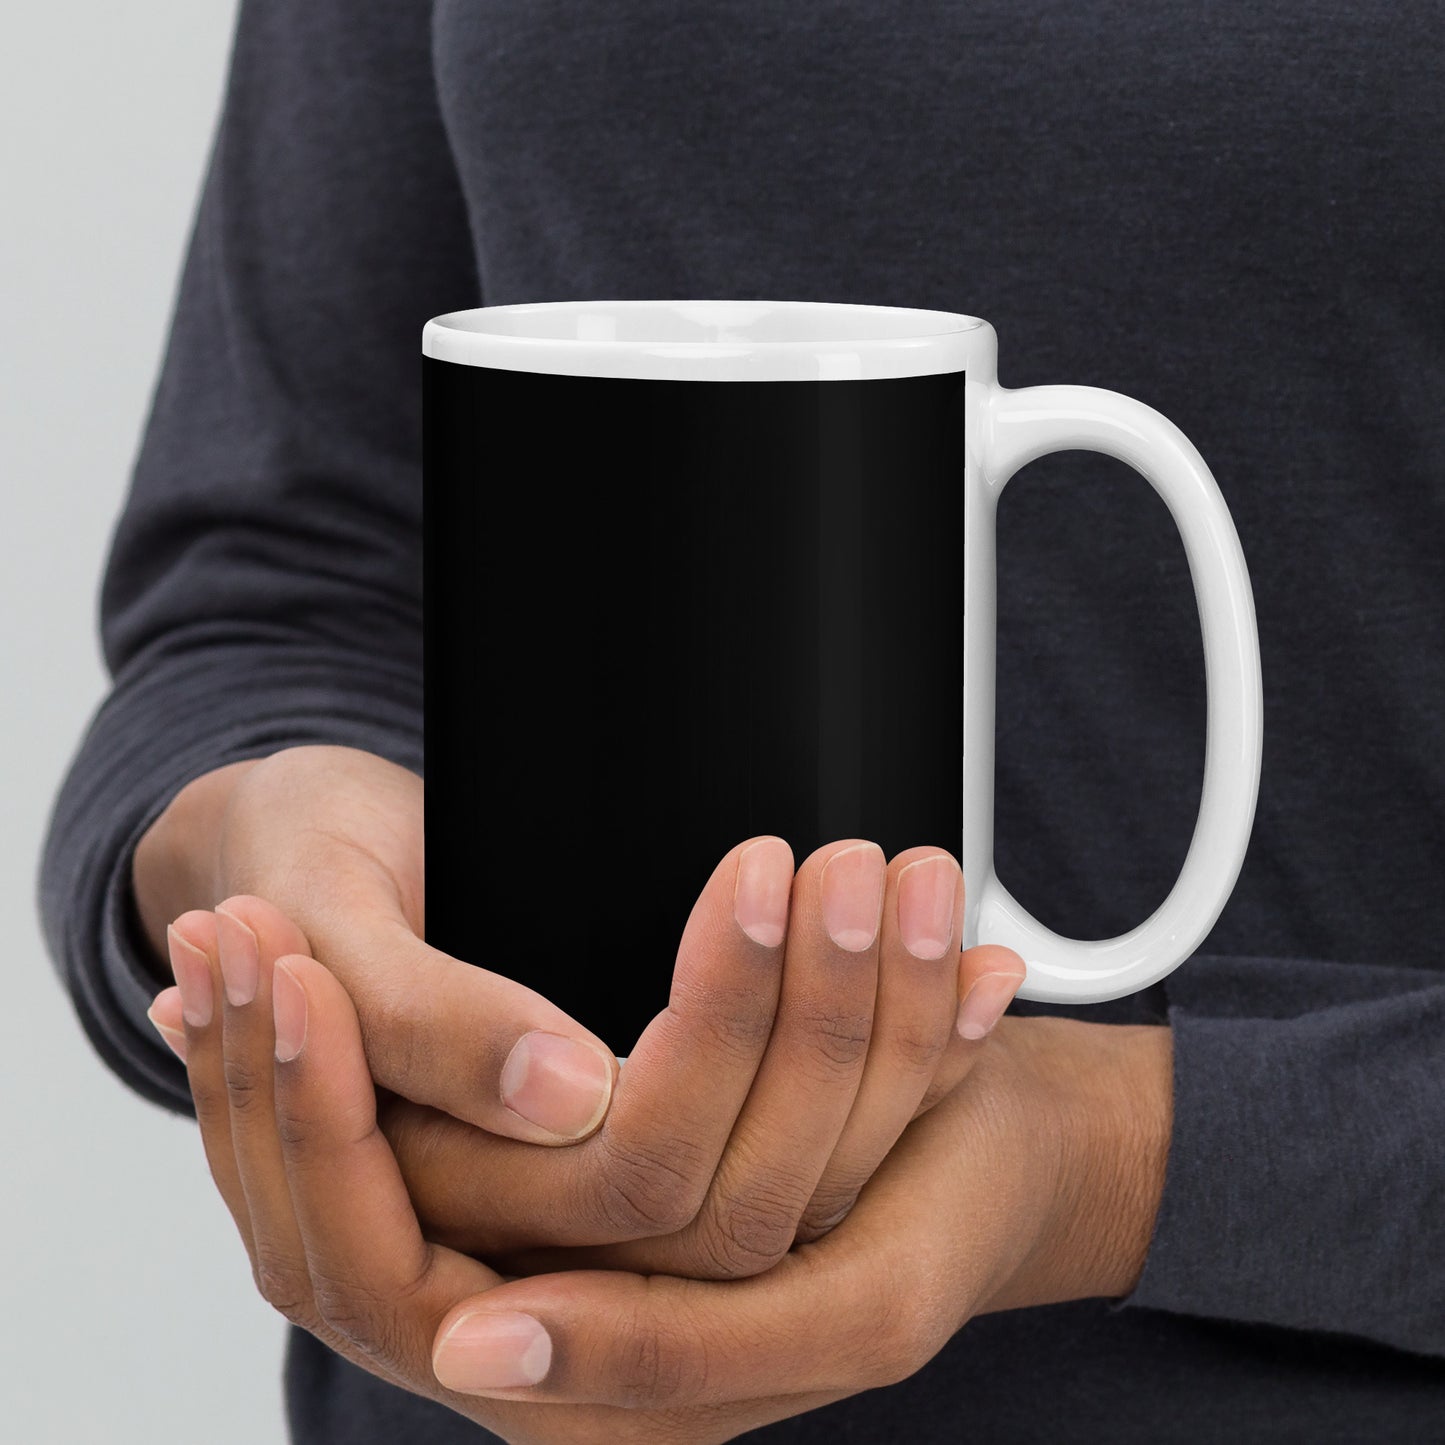 Control glossy mug